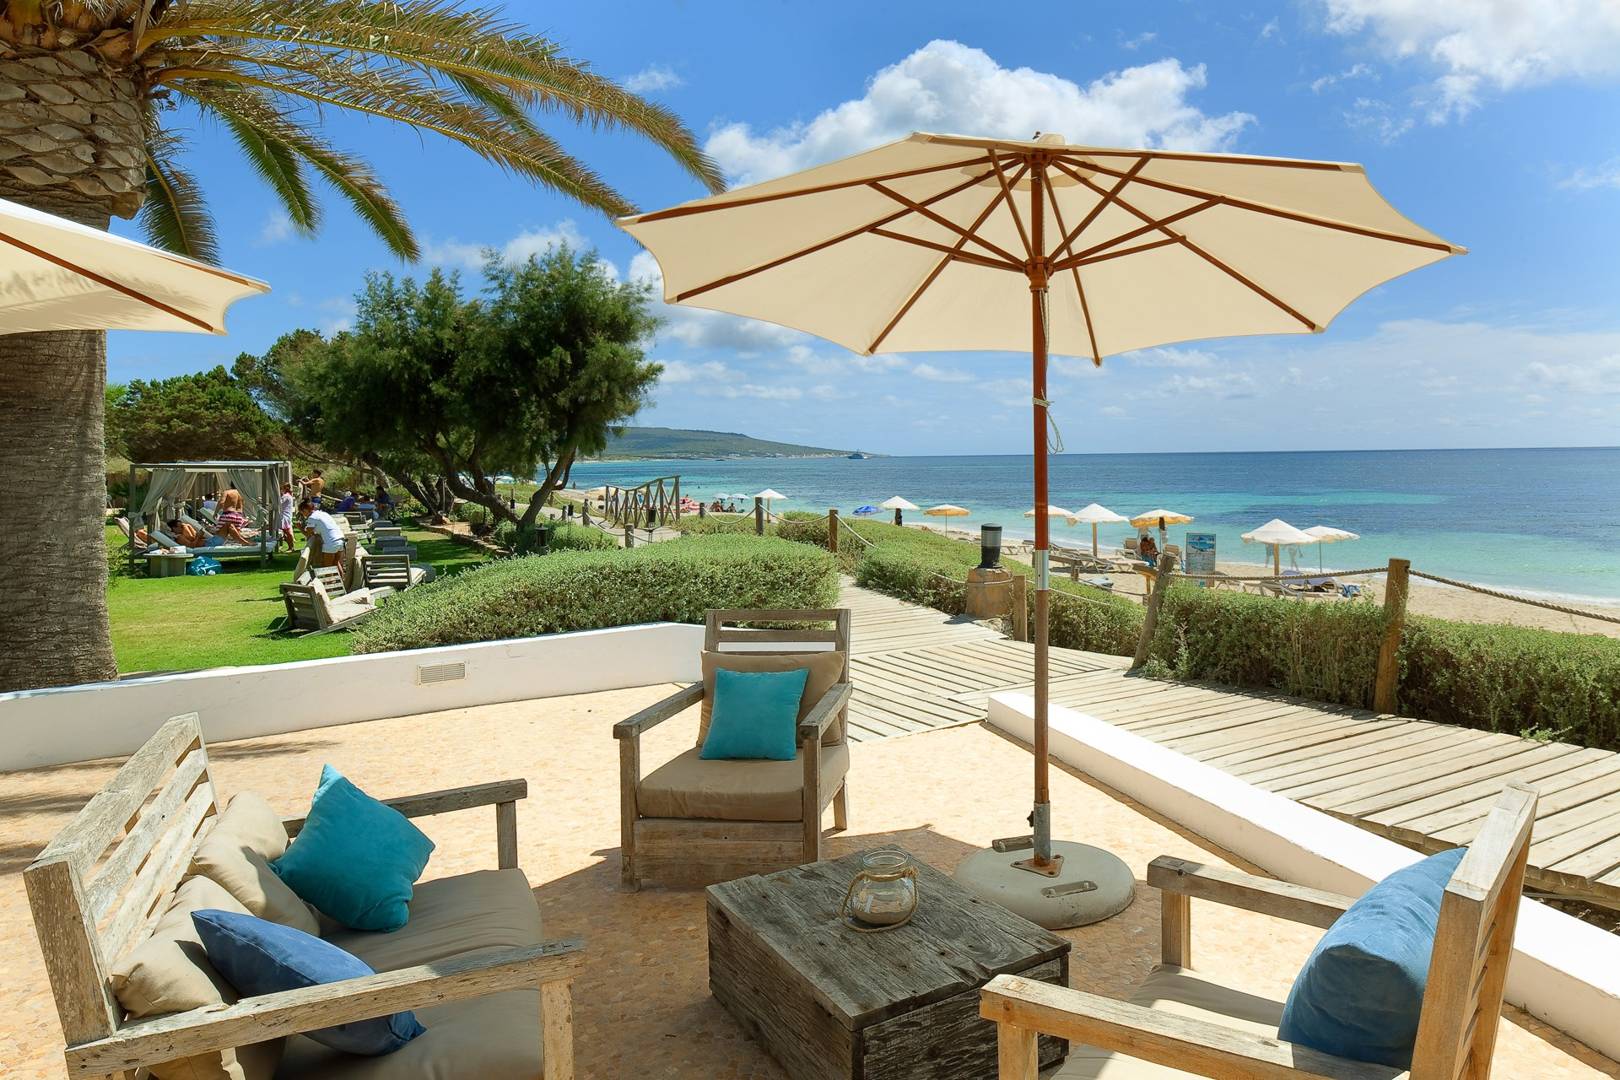 Promo 80 Off La Plage Noire Hotel Resort And Spa Italy 